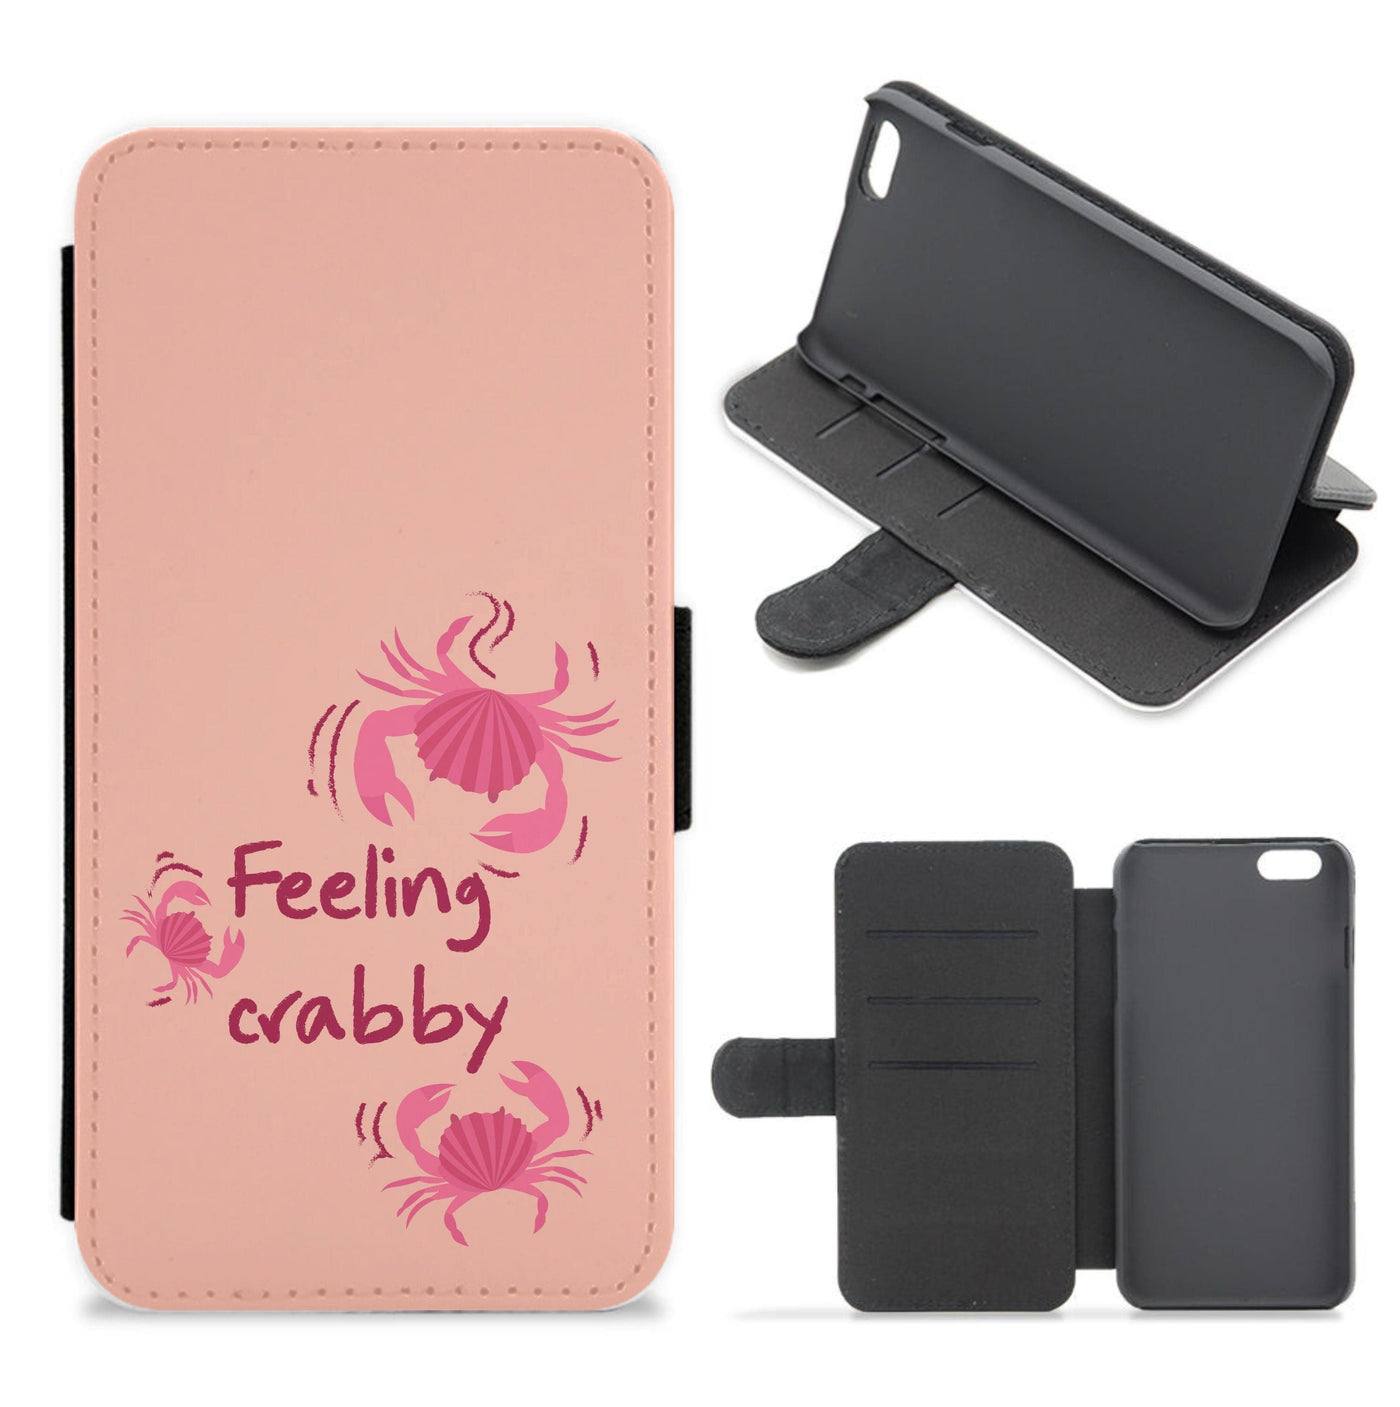 Feeling Crabby - Sealife Flip / Wallet Phone Case